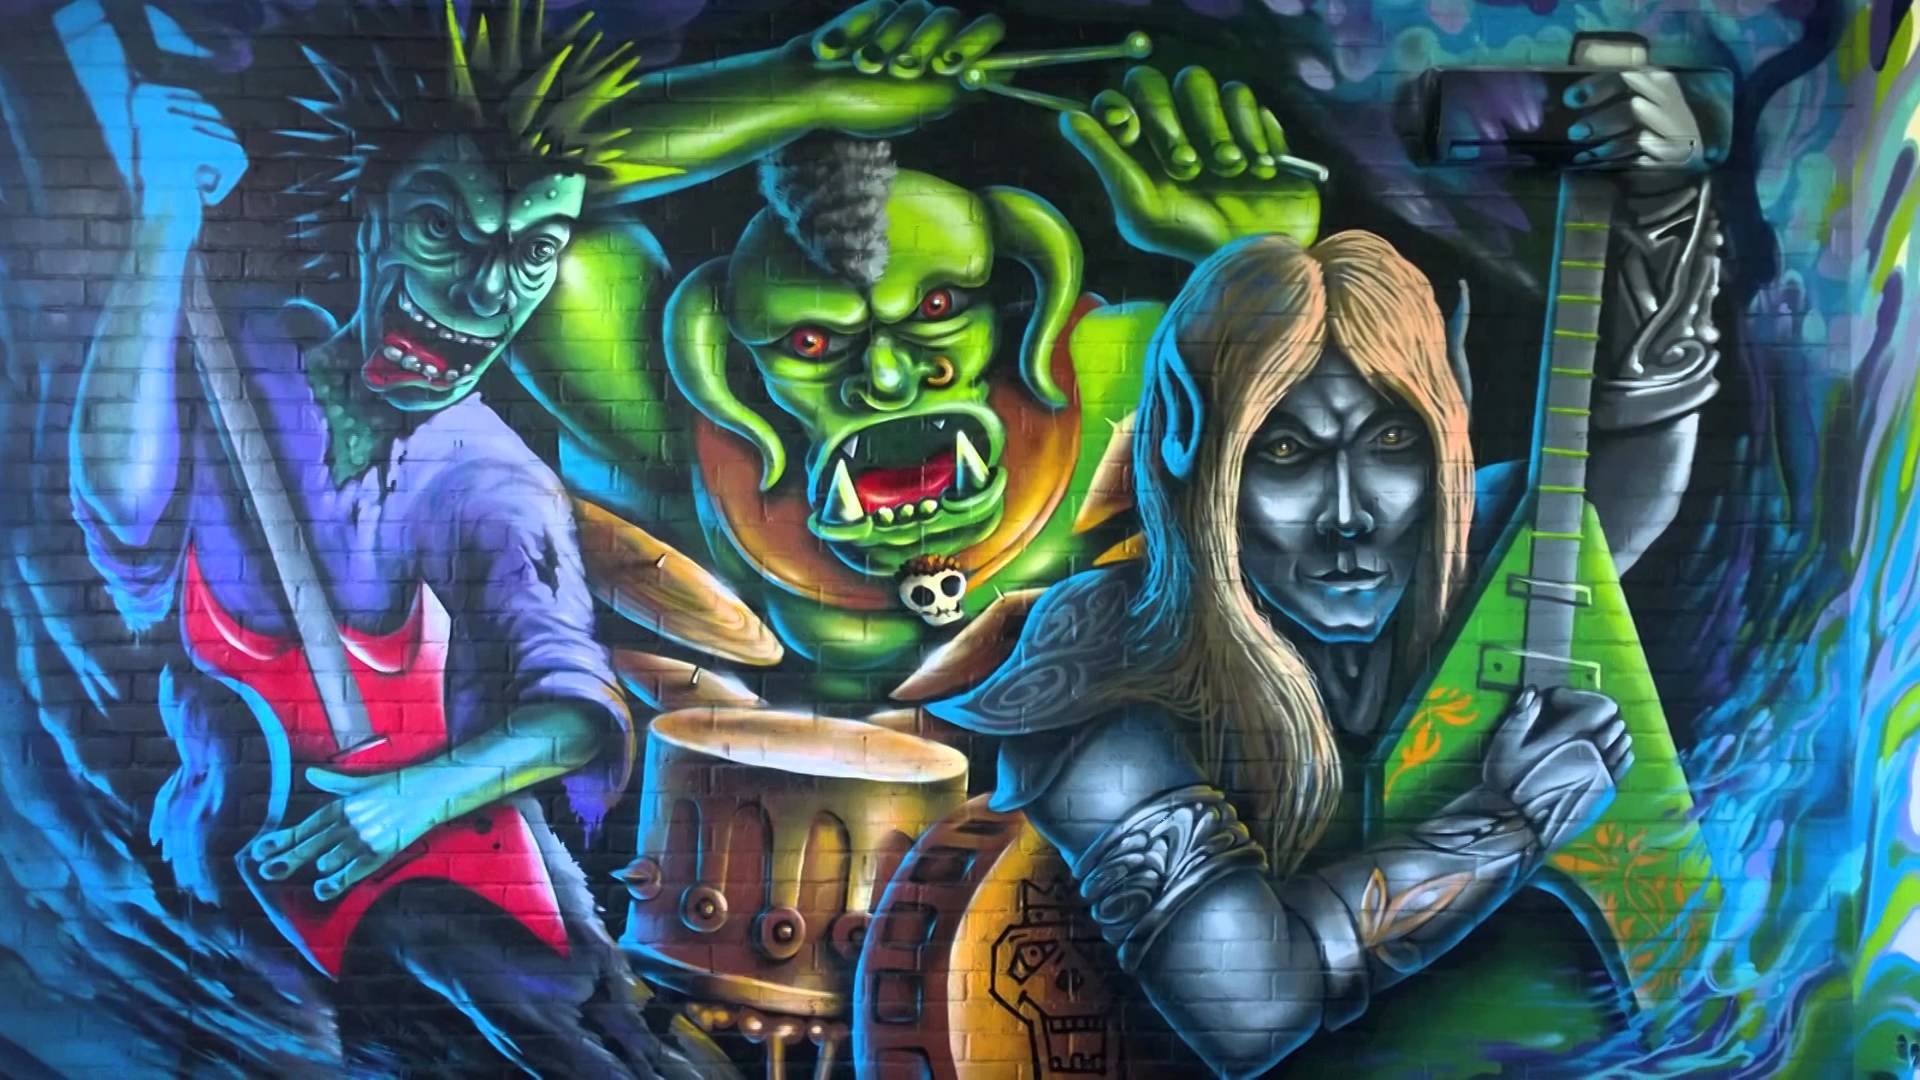 fondos de pantalla de graffiti 4k,pintada,arte,arte callejero,mural,personaje de ficción